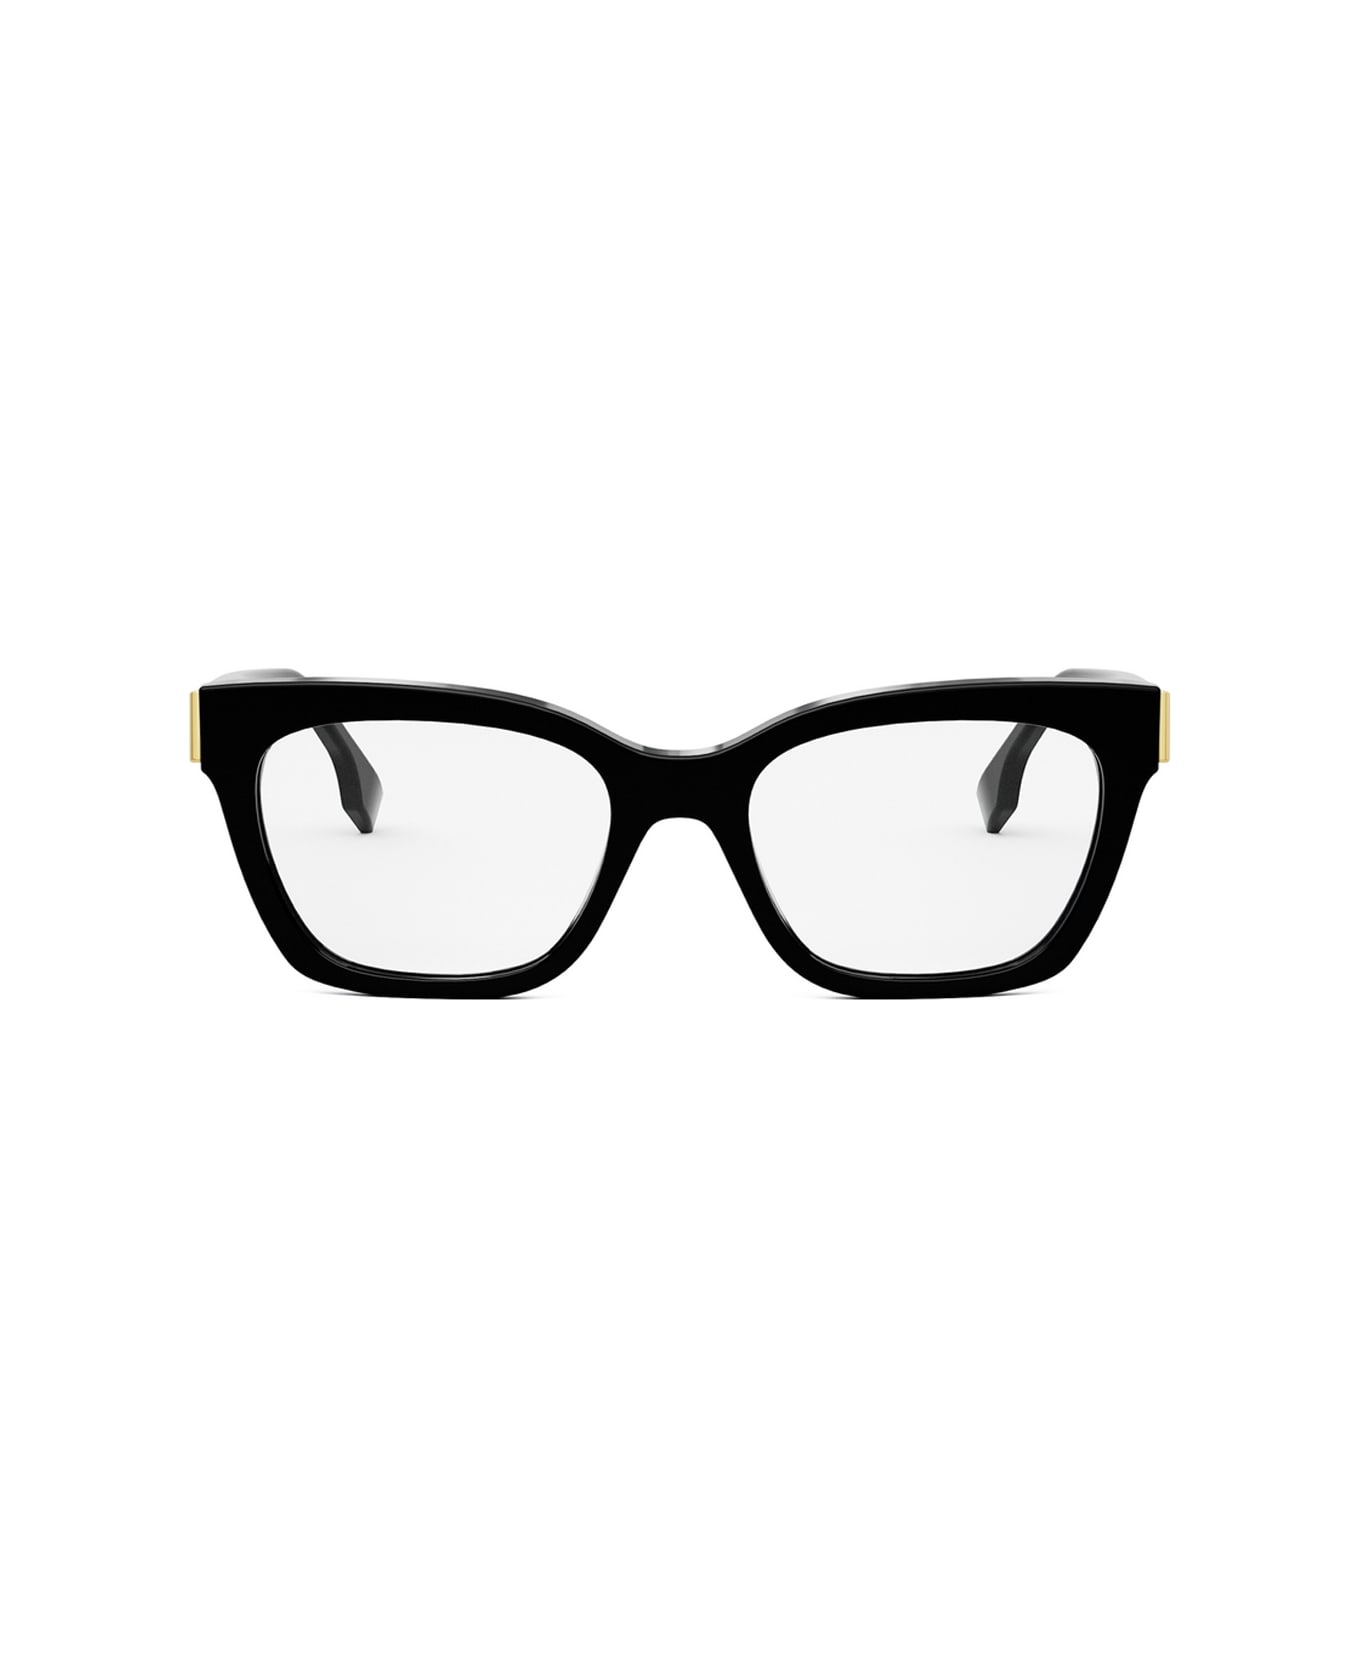 Fendi Eyewear Fe50073i 001 Glasses - Nero